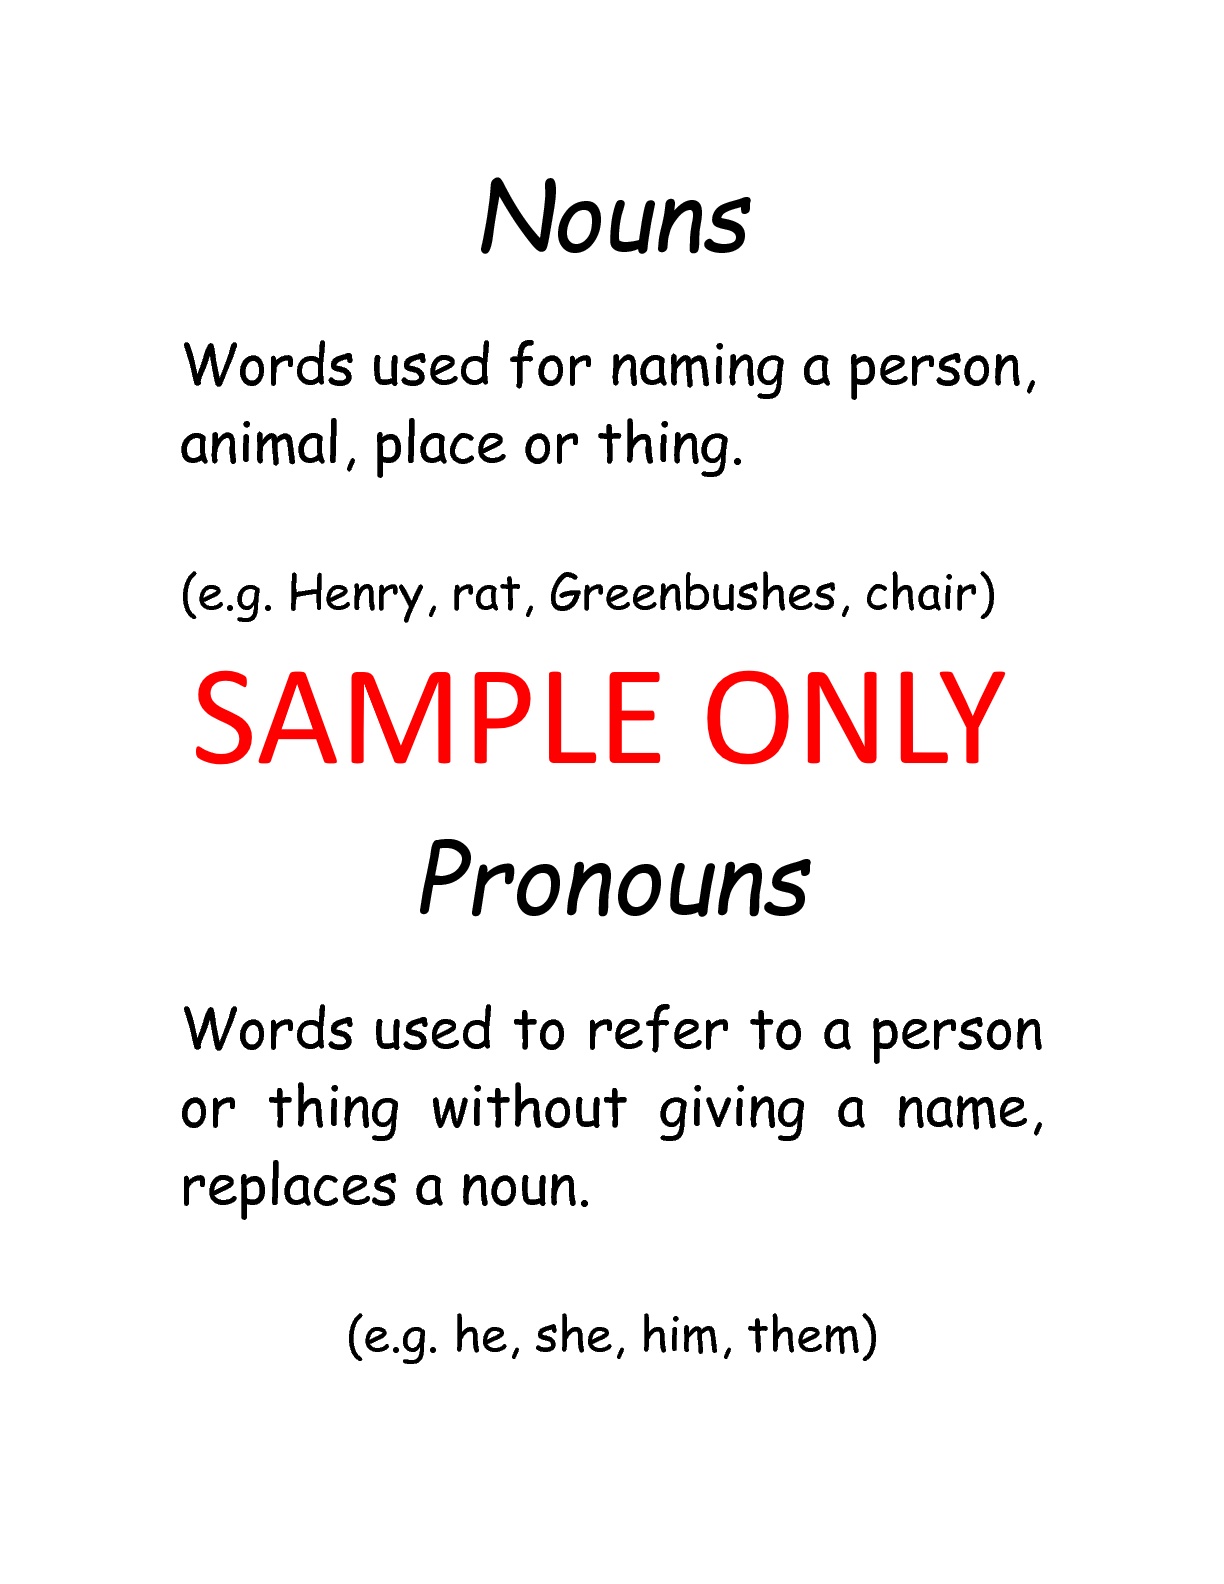 flashcard-nouns-pronouns.jpg